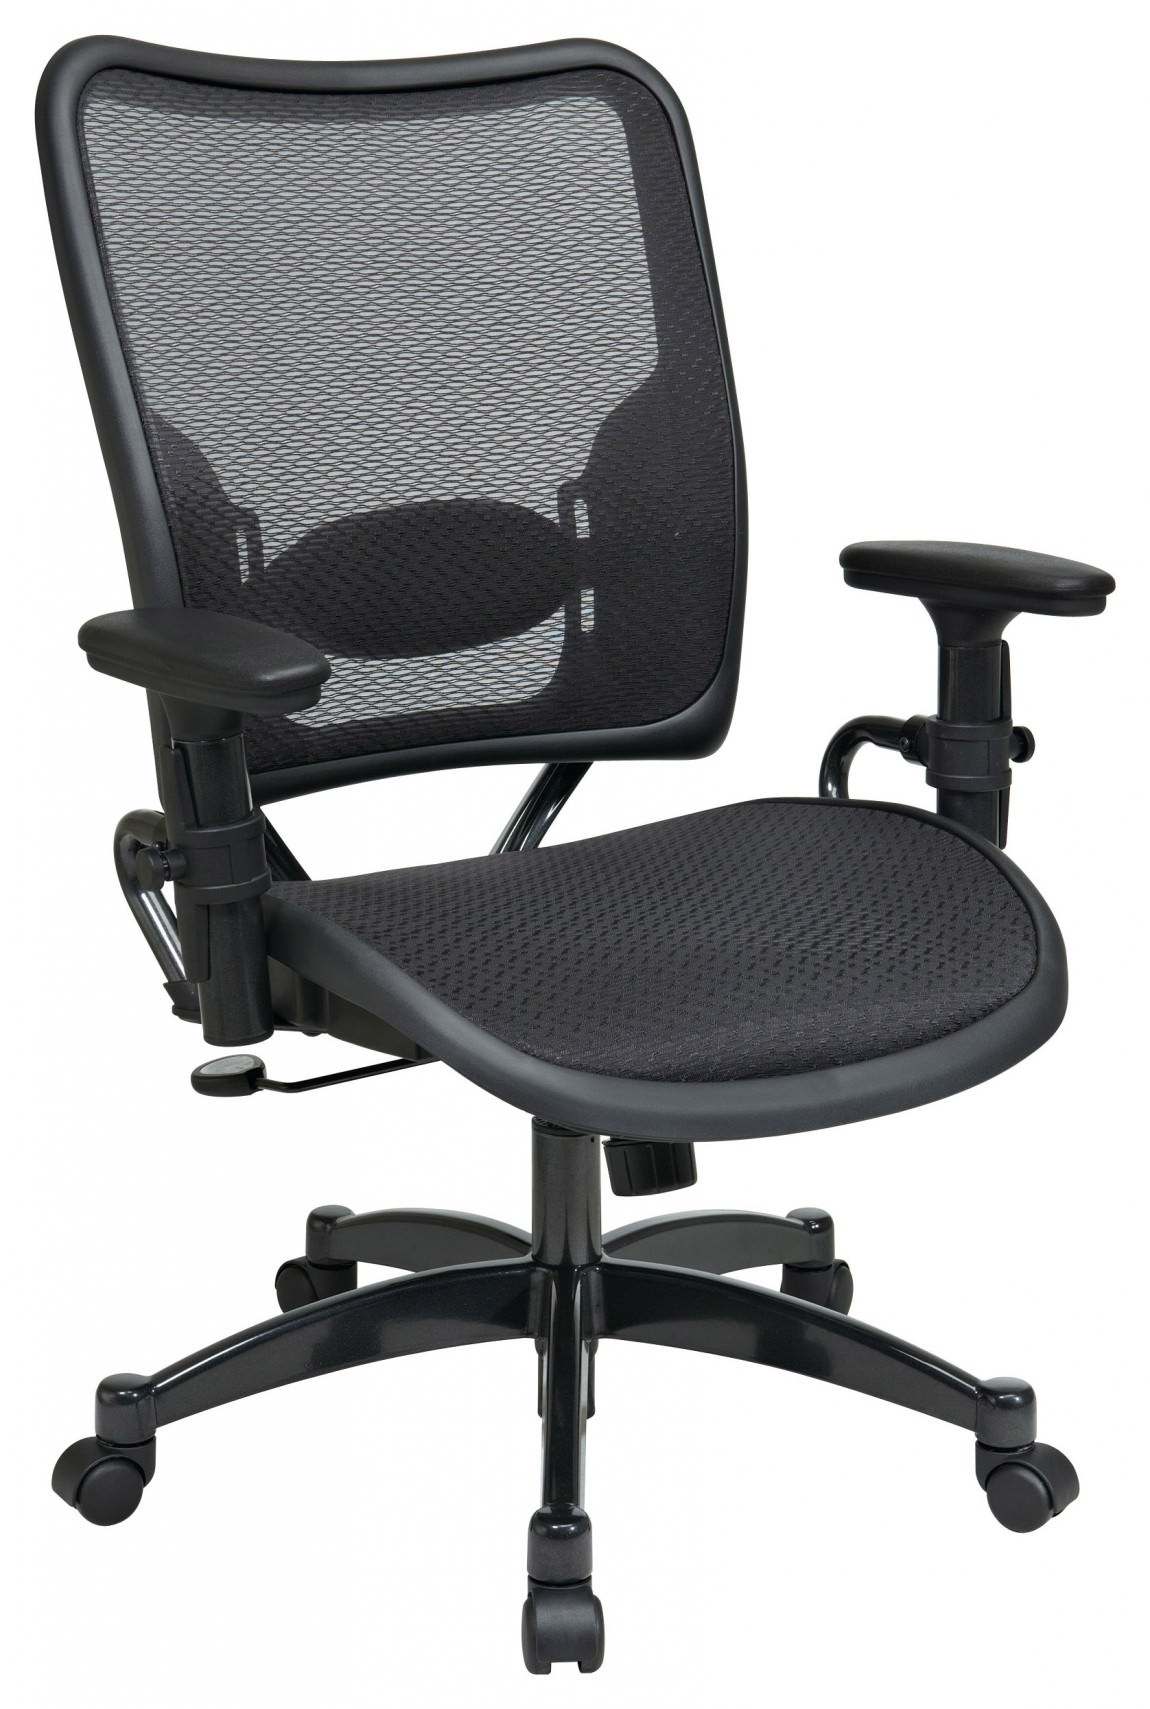 https://madisonliquidators.com/images/p/1150/25197-mesh-back-office-chair-1.jpg